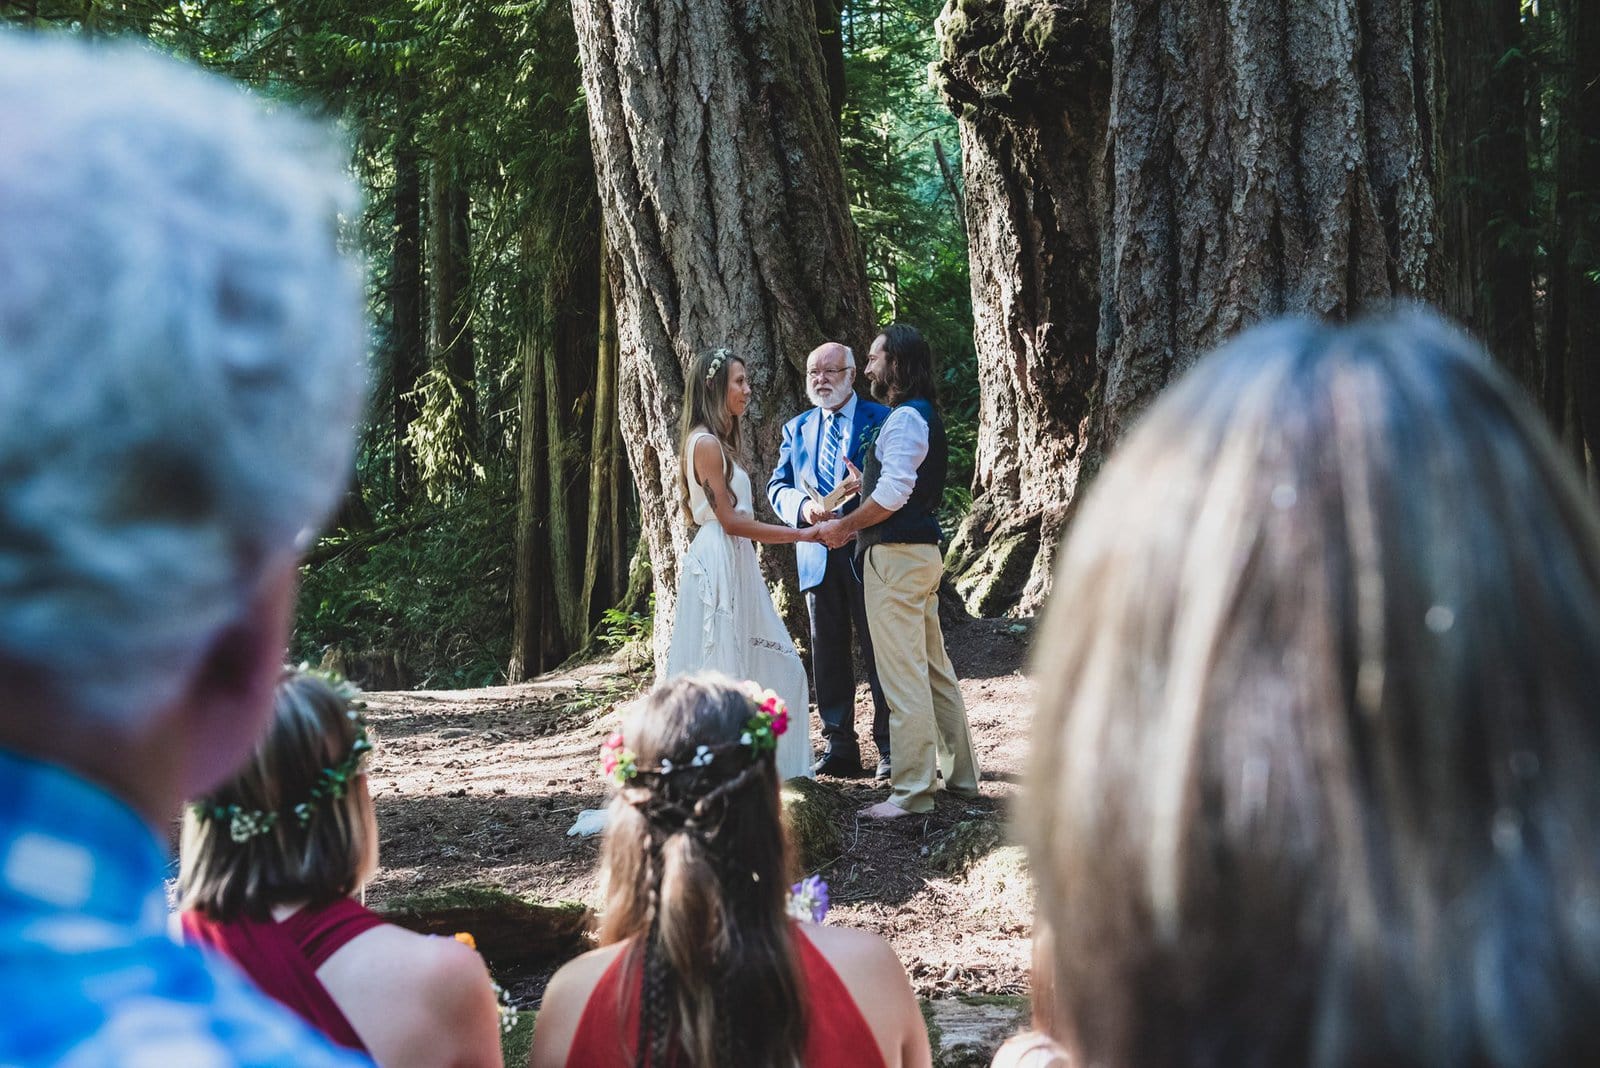 Intimate forest wedding ceremony.